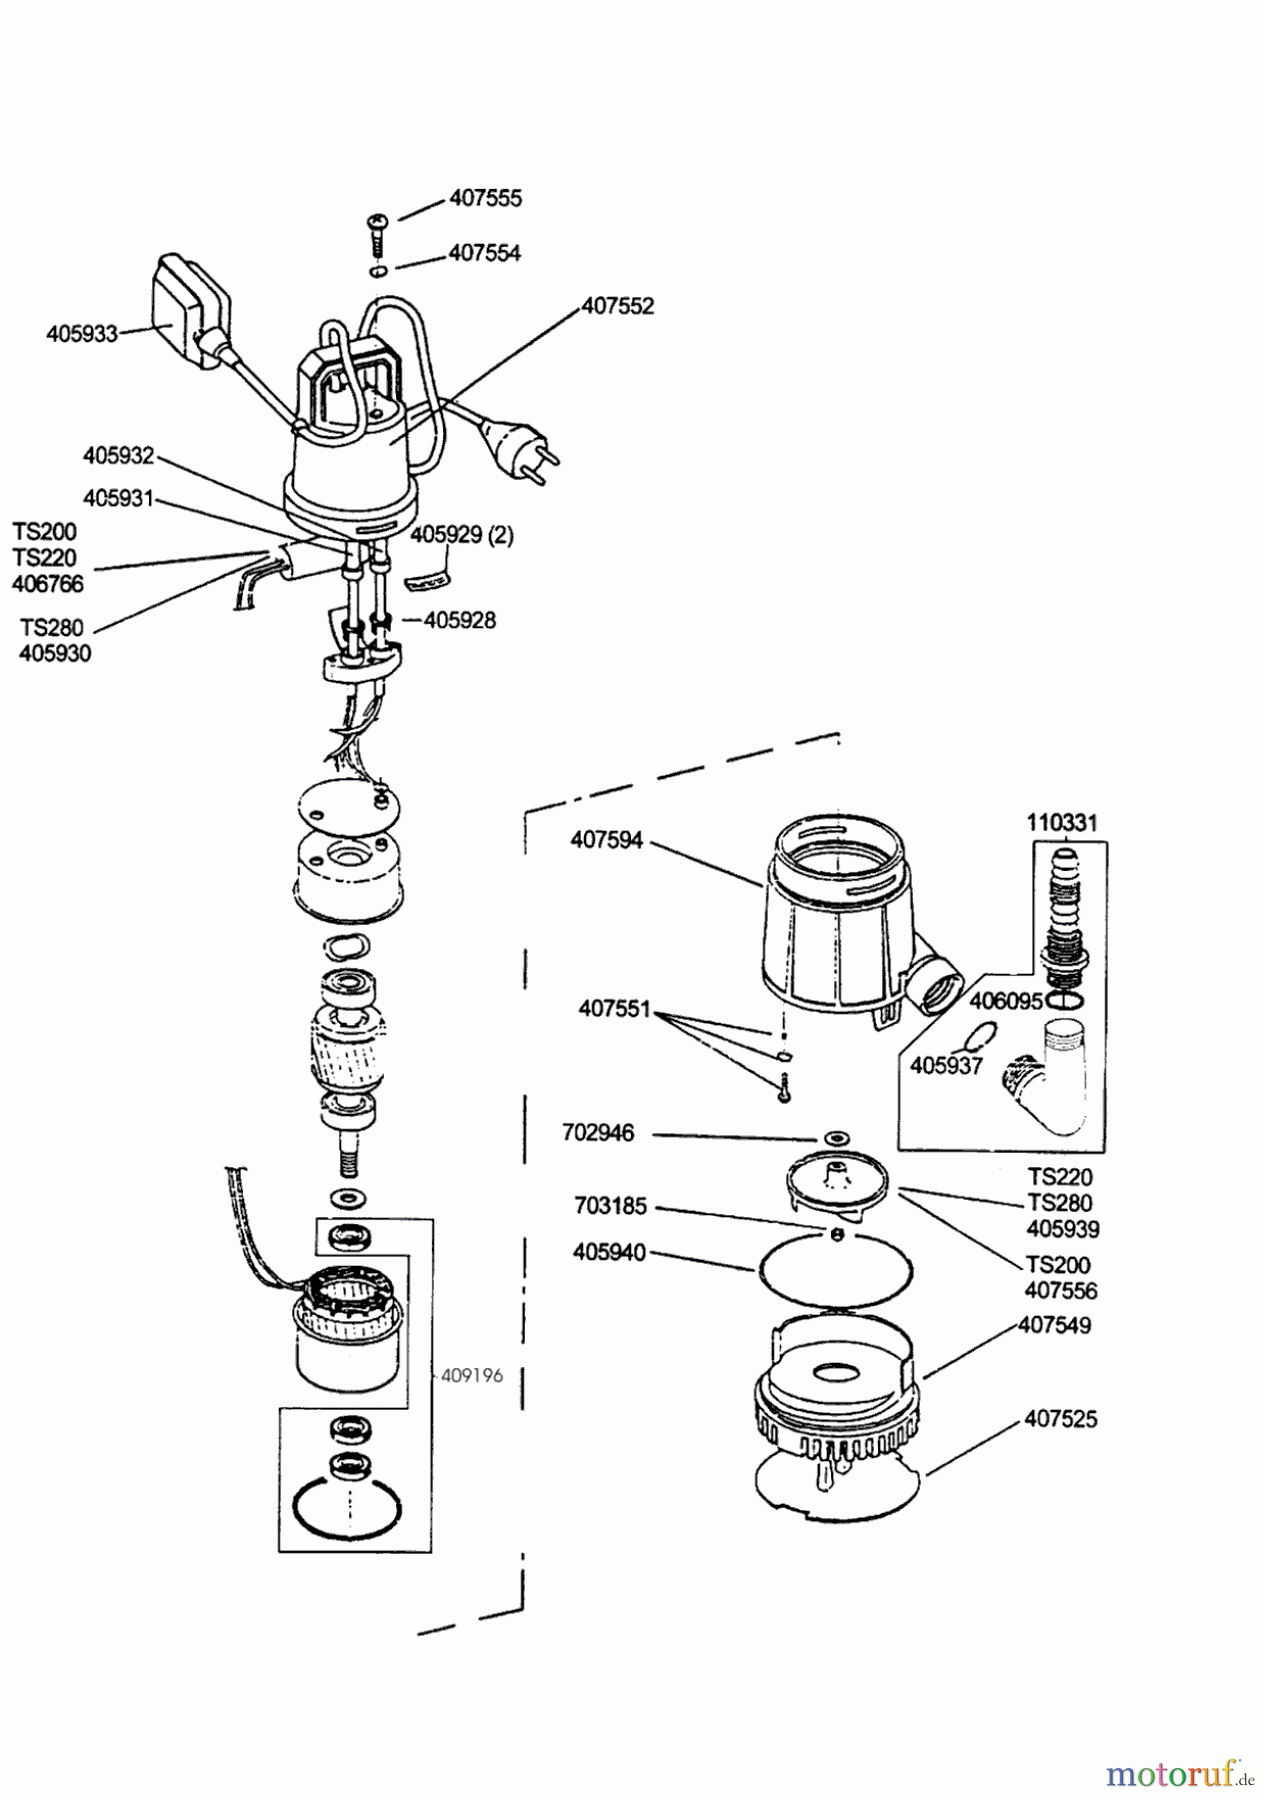  AL-KO Wassertechnik Tauchpumpen TS 200 ab 12/1996 Seite 1